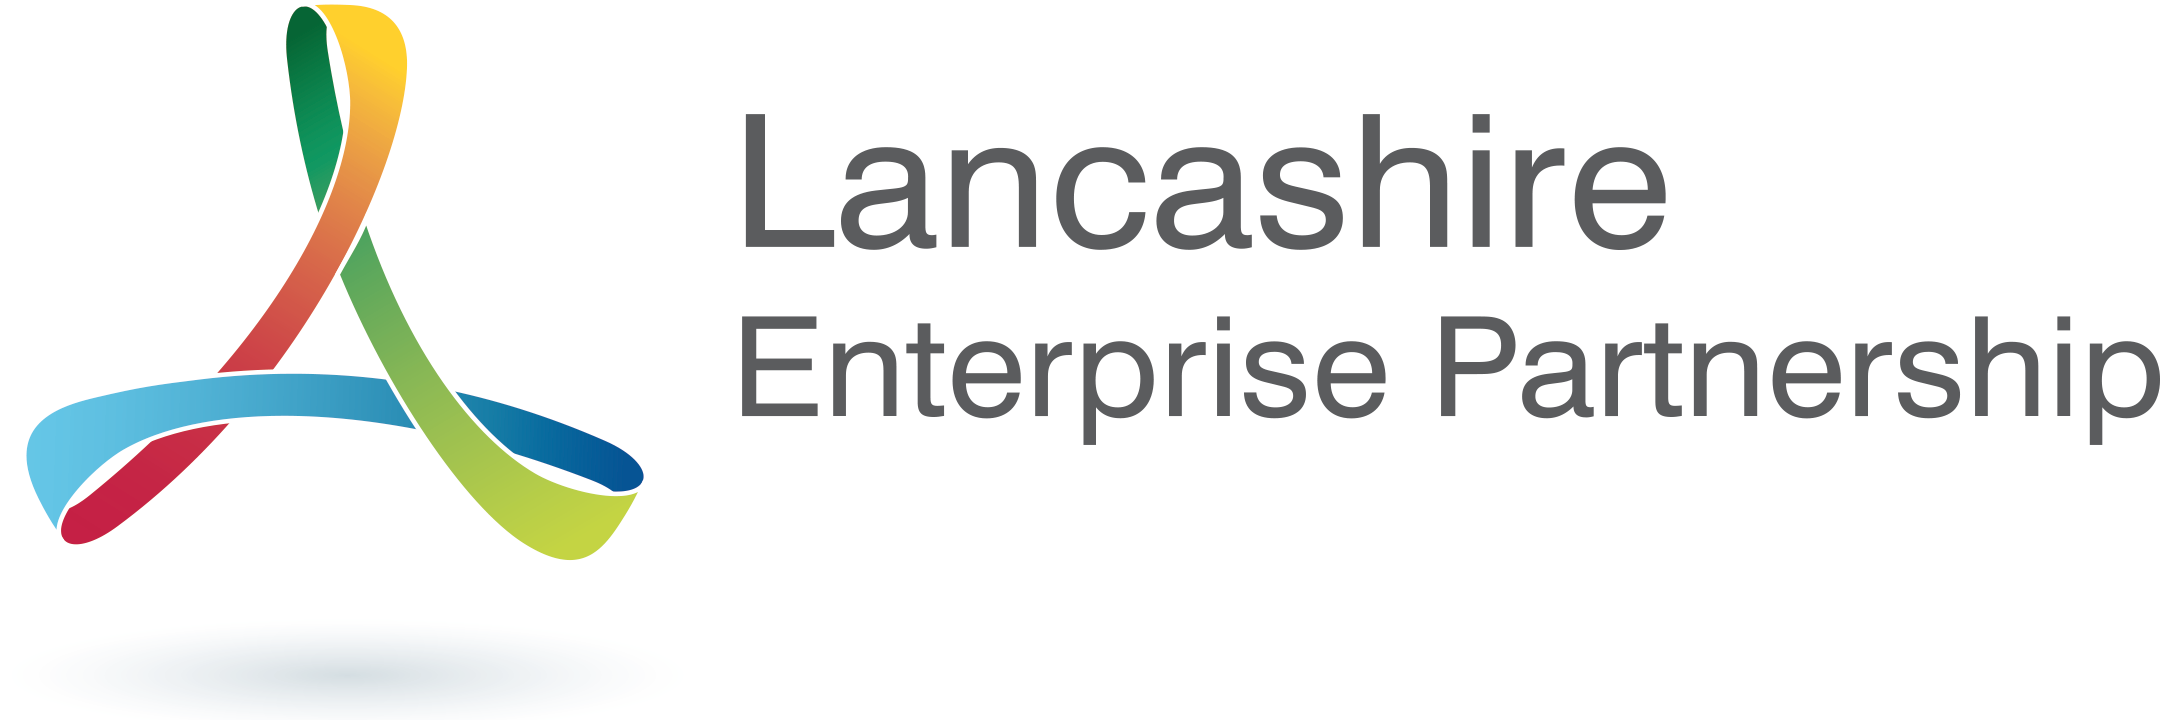 Lancashire Enterprise Partnership